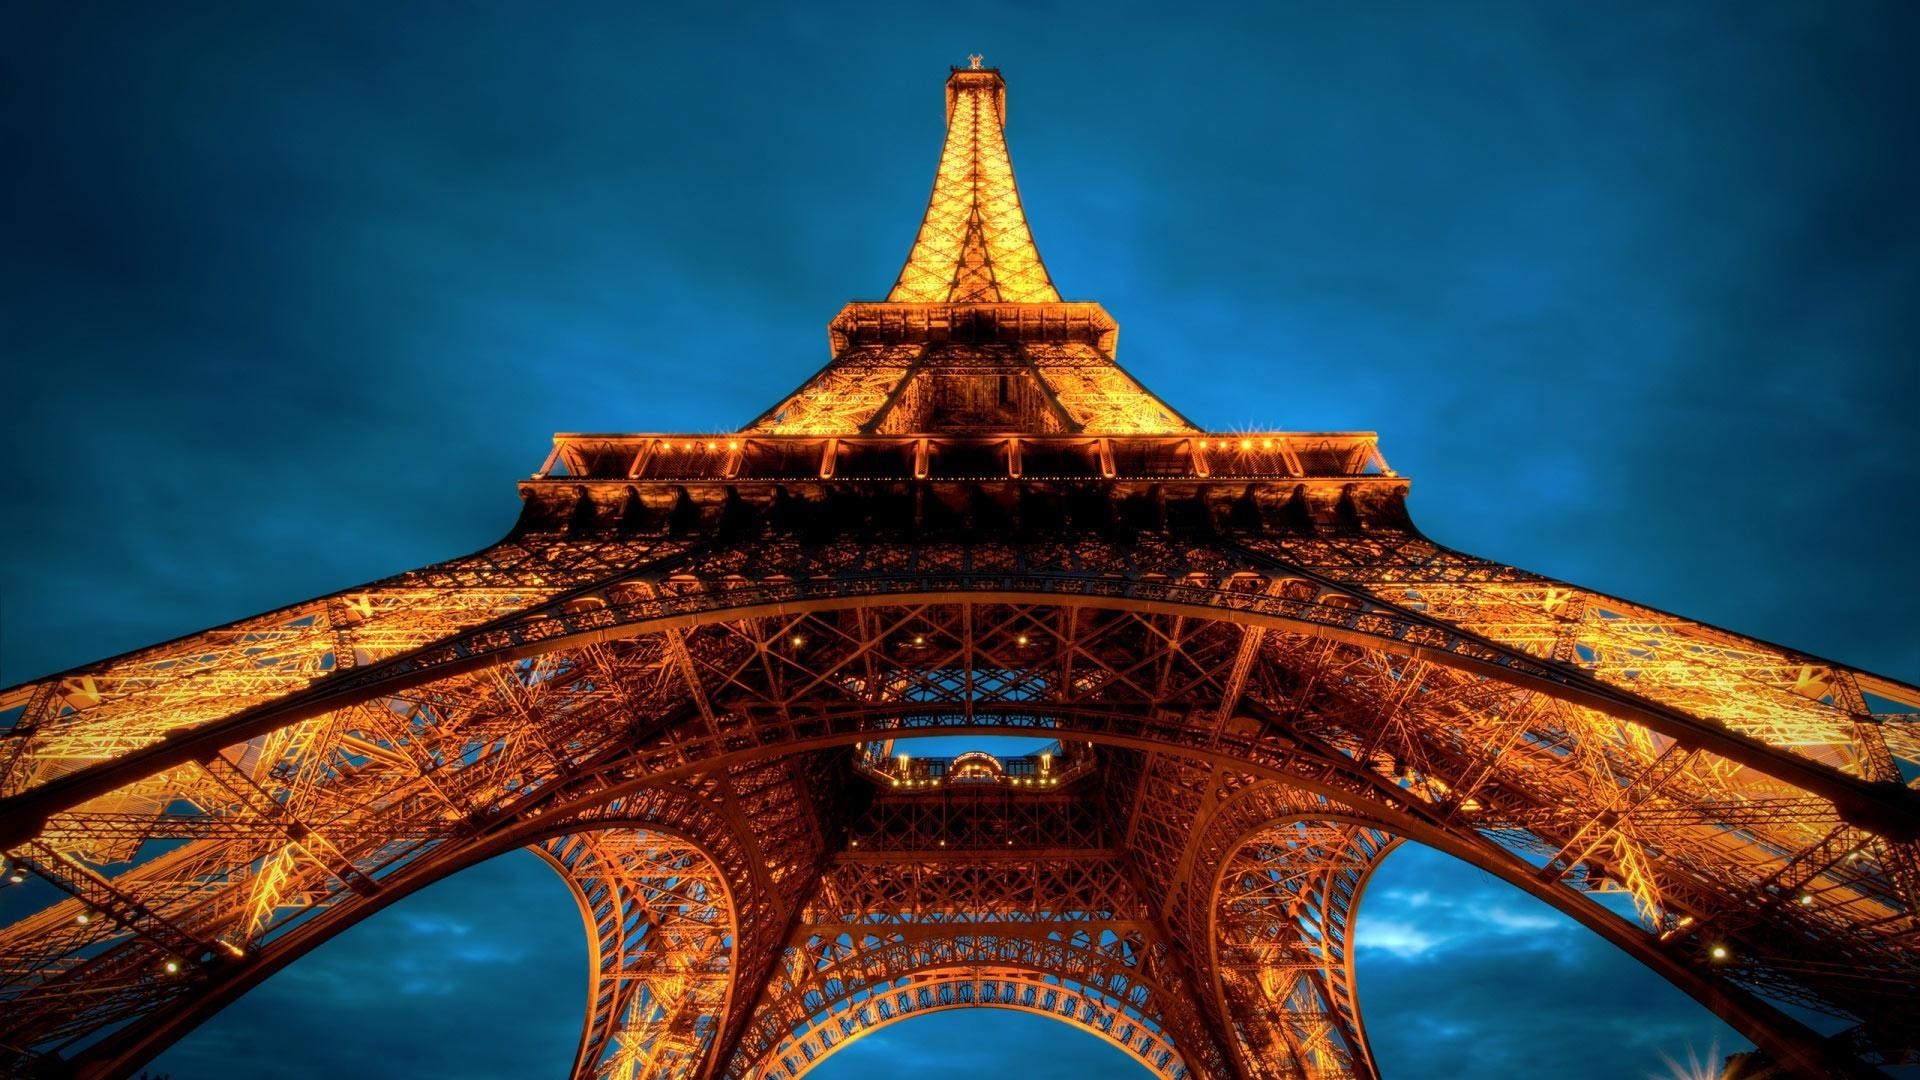 1920x1080 Eiffel Tower in Paris France Wonders of The World Wallpaper | HD Wallpapers